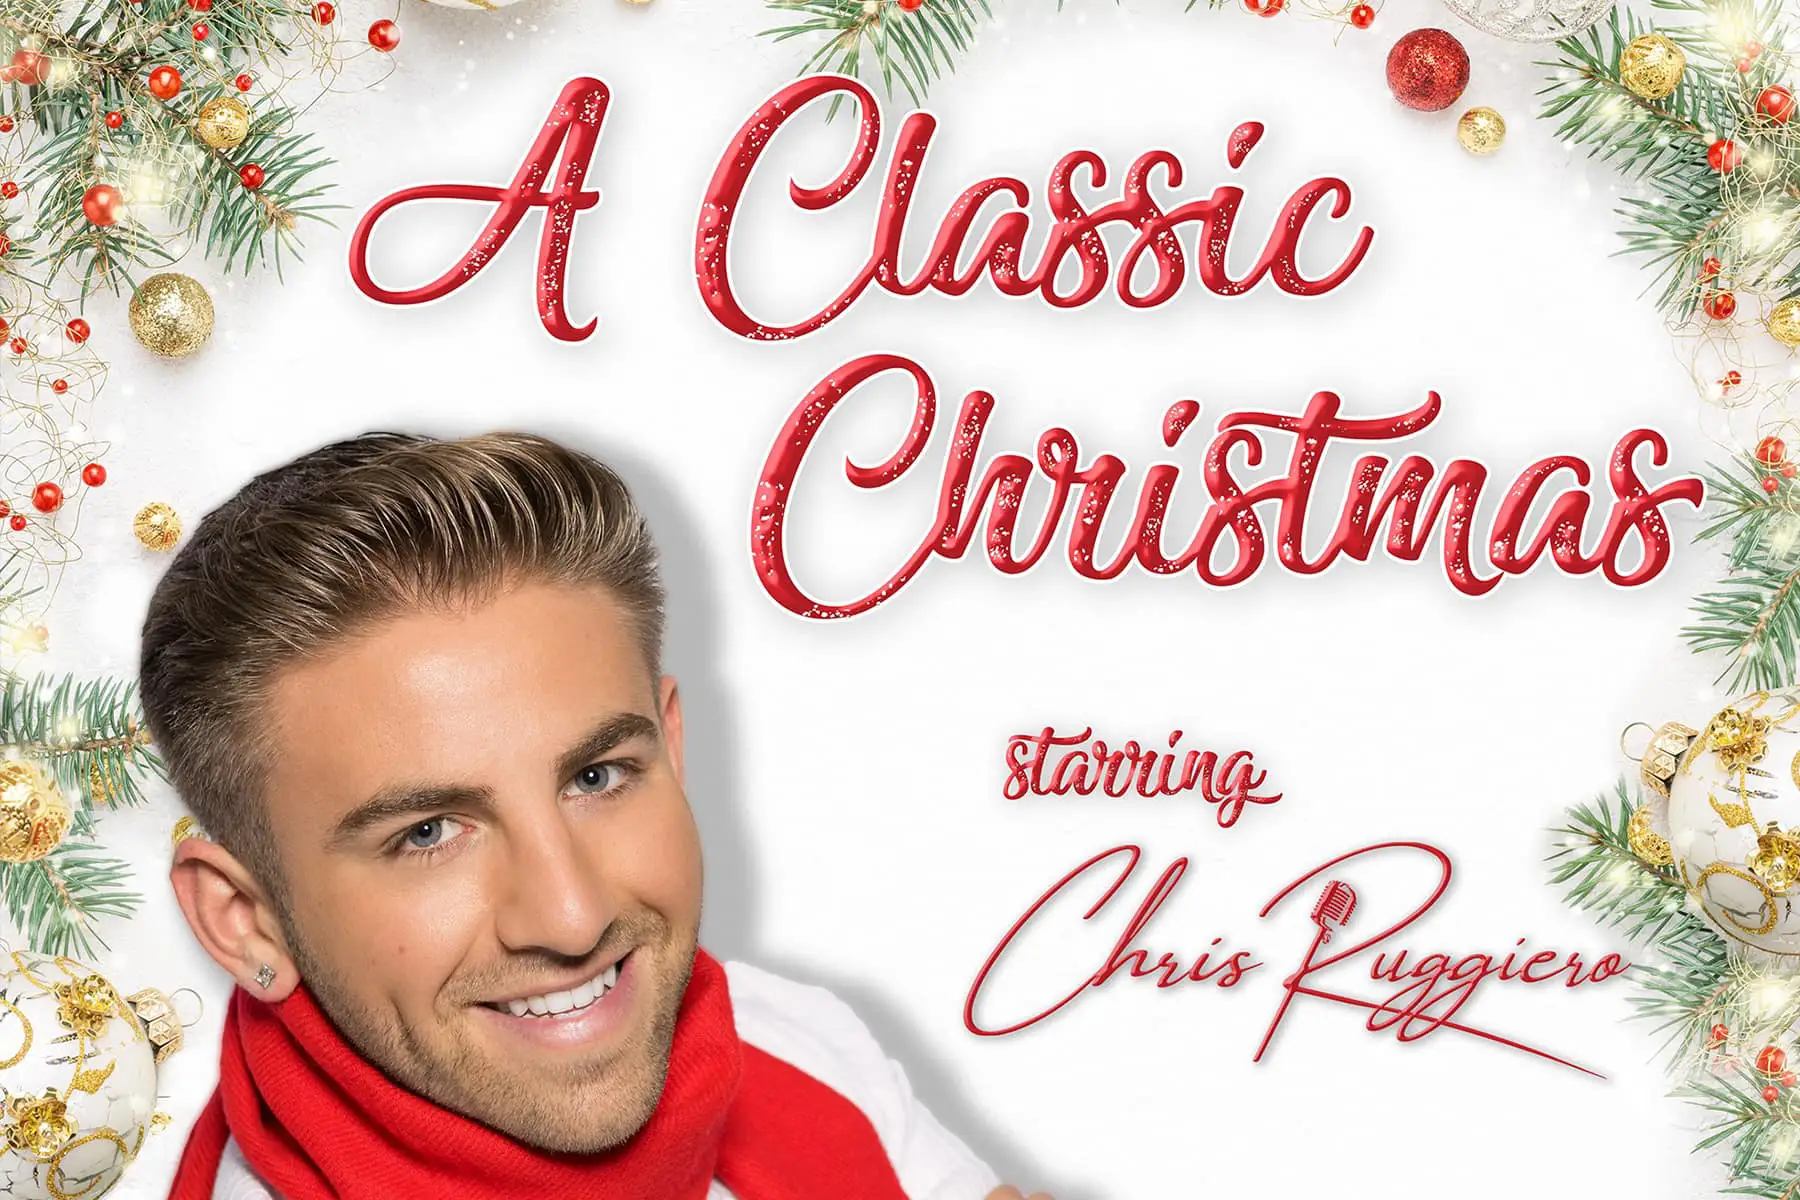 A Classic Christmas starring Chris Ruggierro